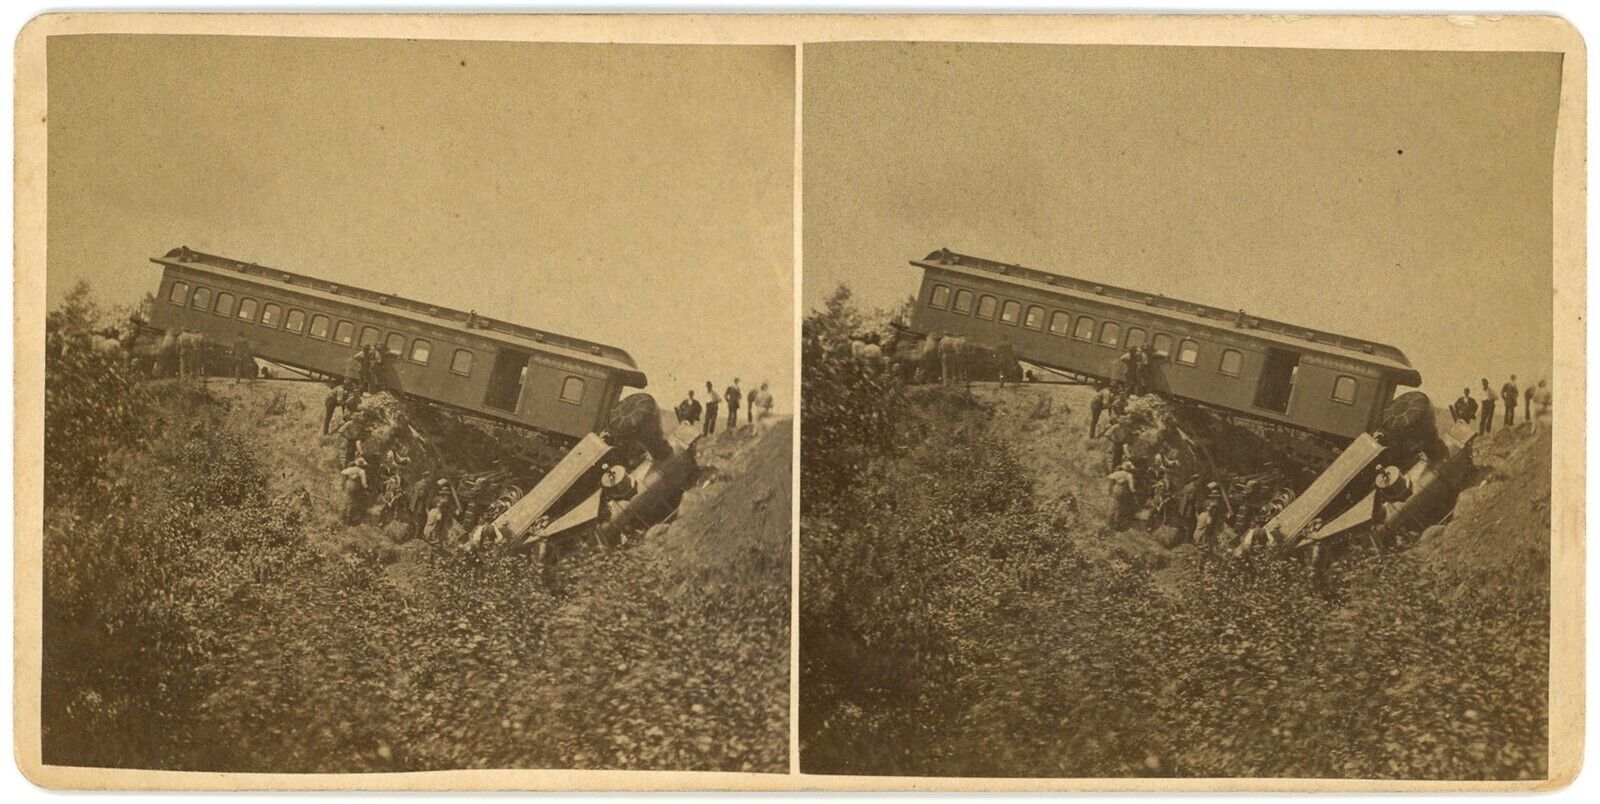 VERMONT SV - Central Vermont Railroad Wreck - 1870s